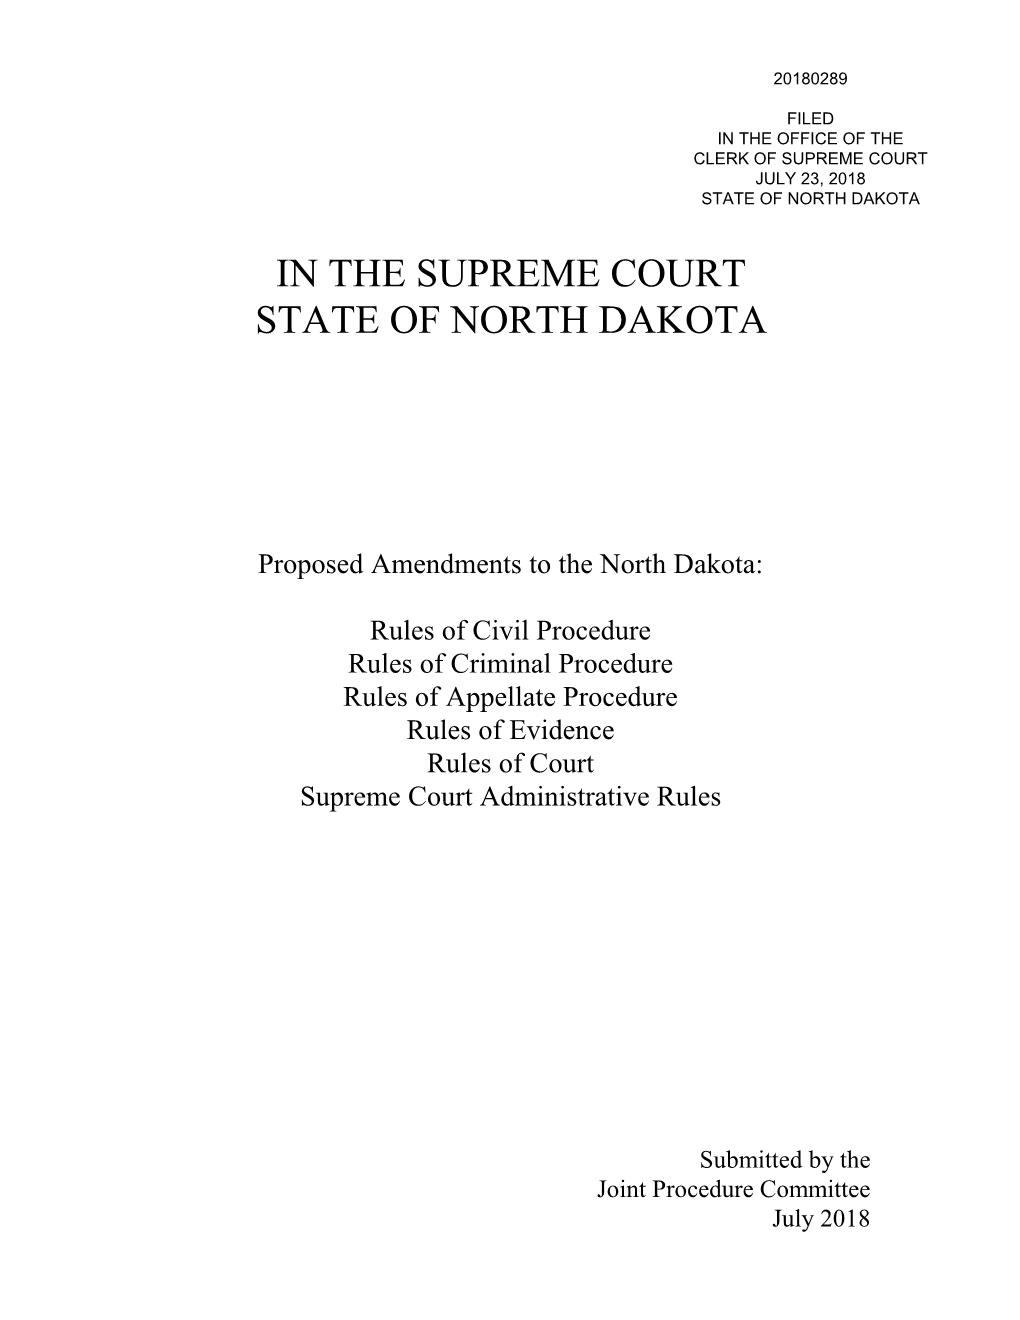 In the Supreme Court State of North Dakota